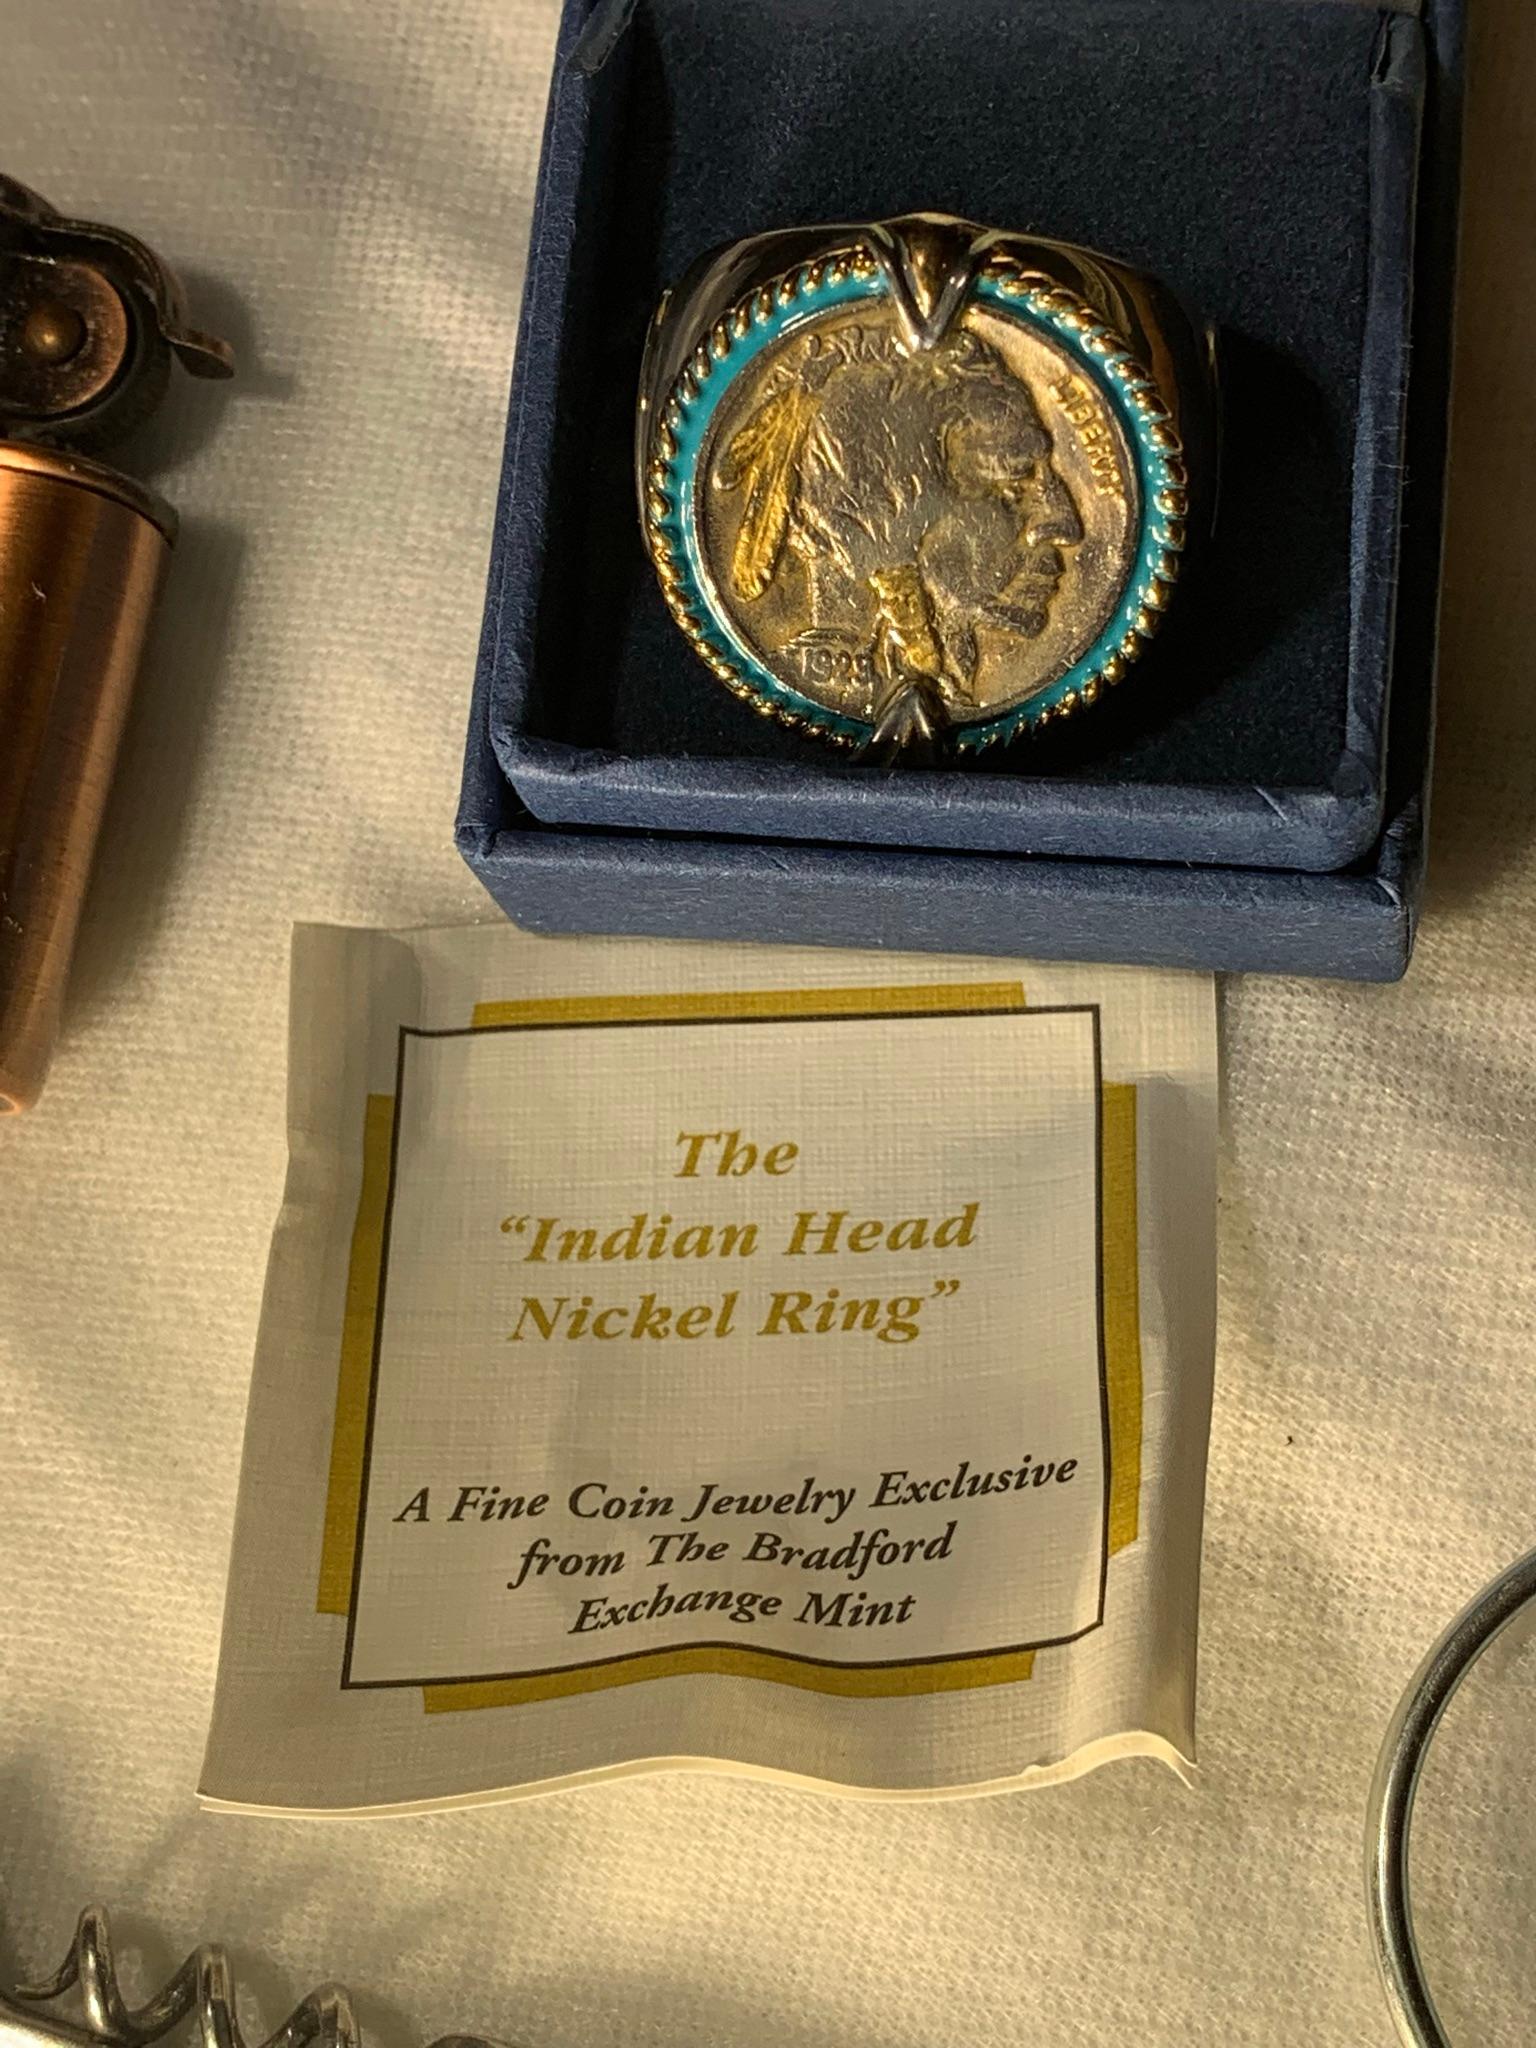 Camel Lighter, Indian Head Nickel Ring, Philip Crowe Pocket Watch & More